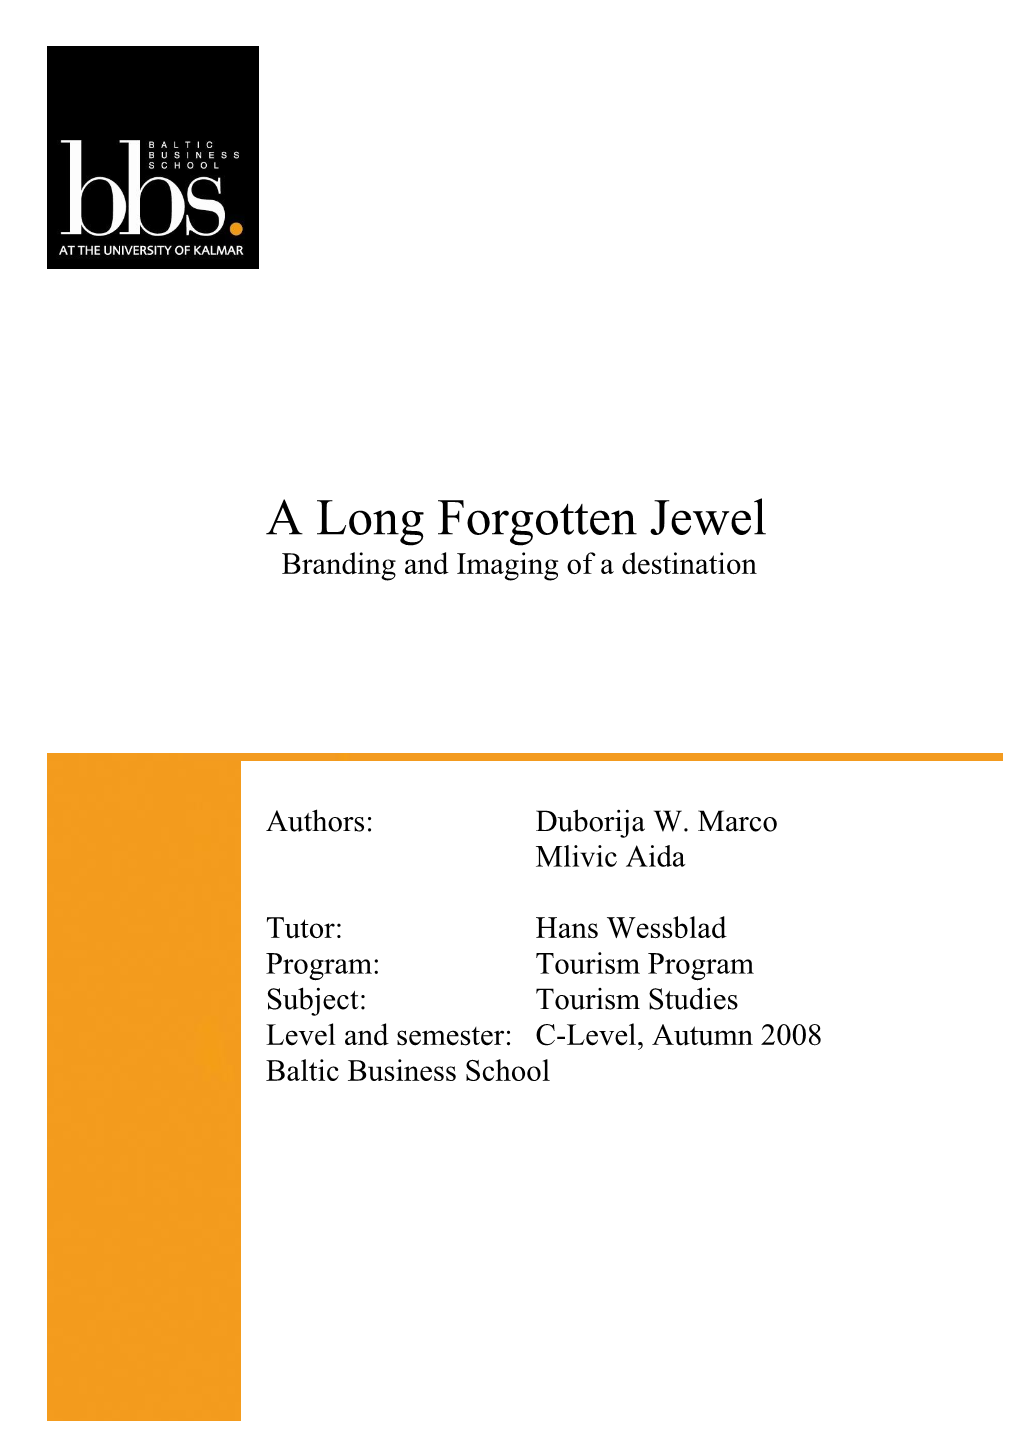 A Long Forgotten Jewel Branding and Imaging of a Destination